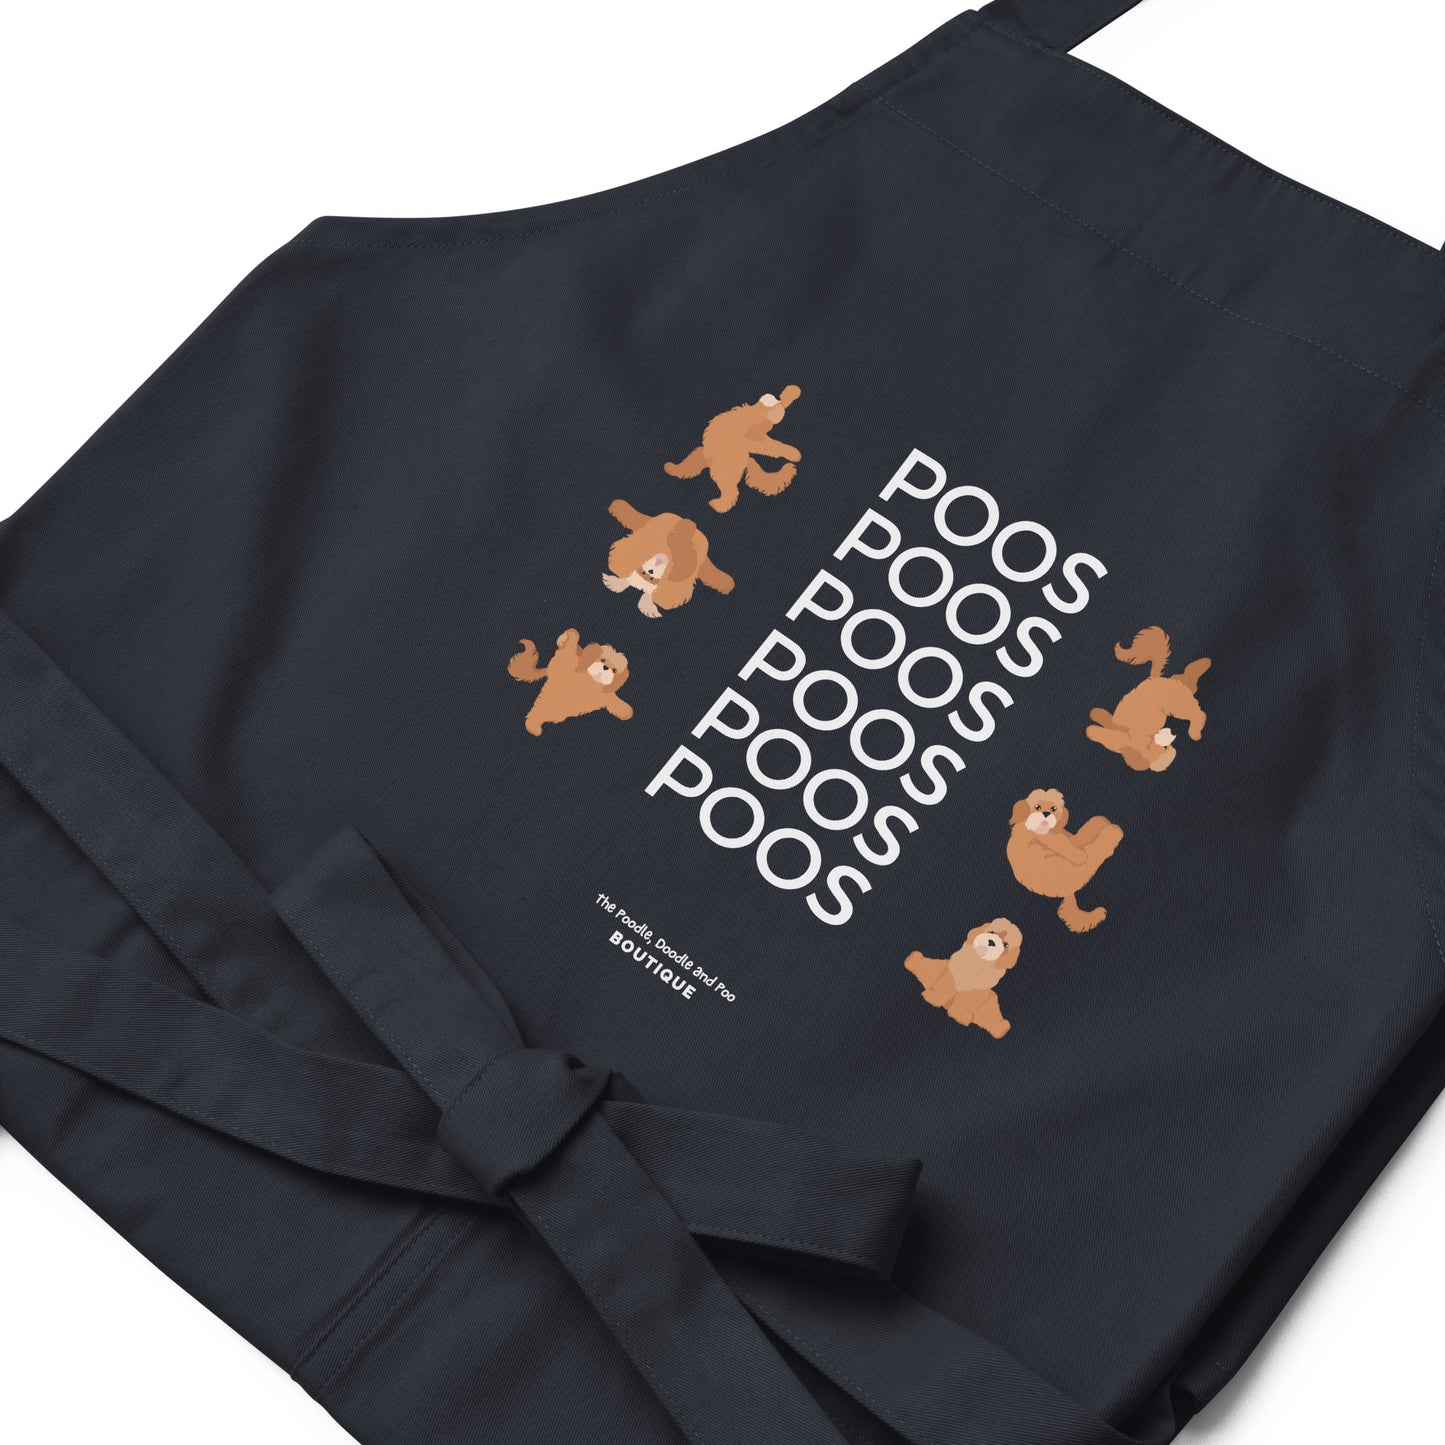 "Poos, Poos, Poos" Organic cotton apron